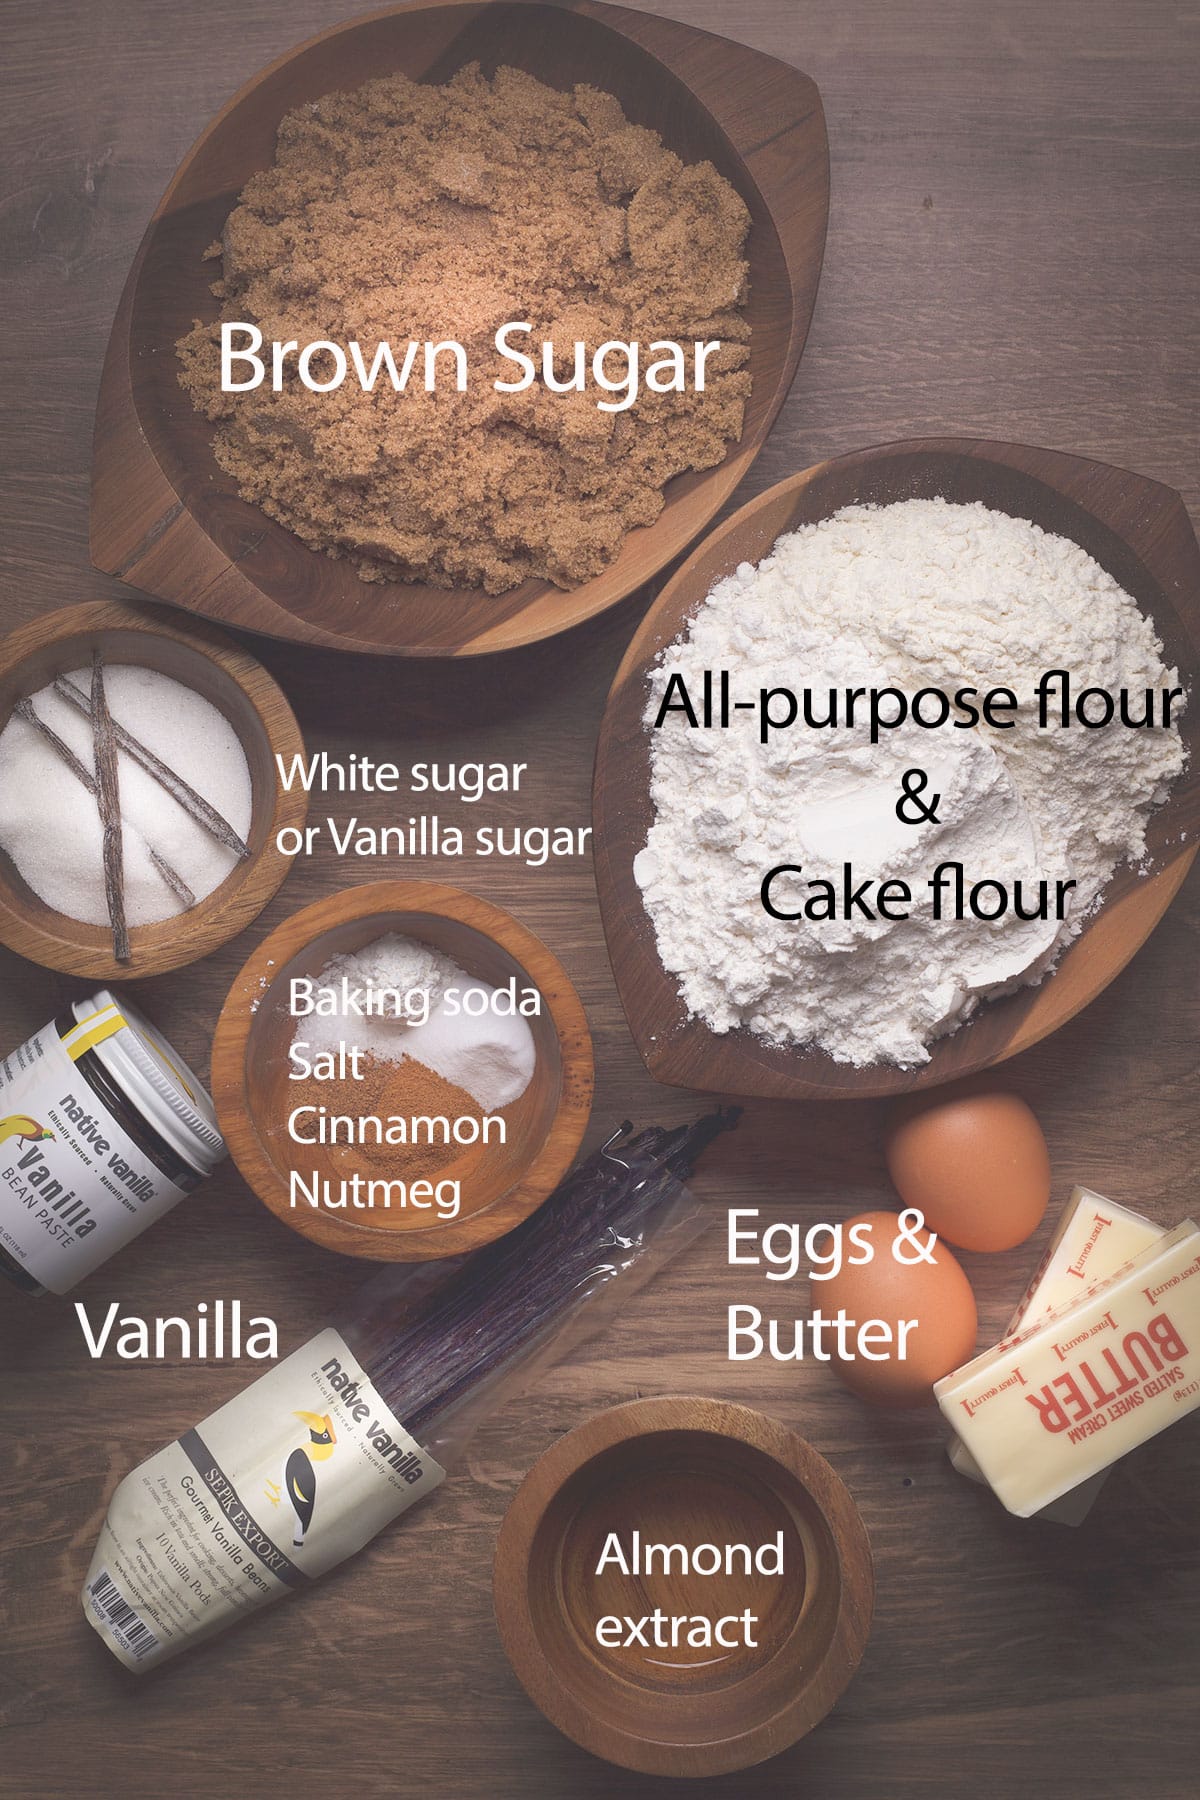 All the ingredients needed to make vanilla bean brown sugar cookies.